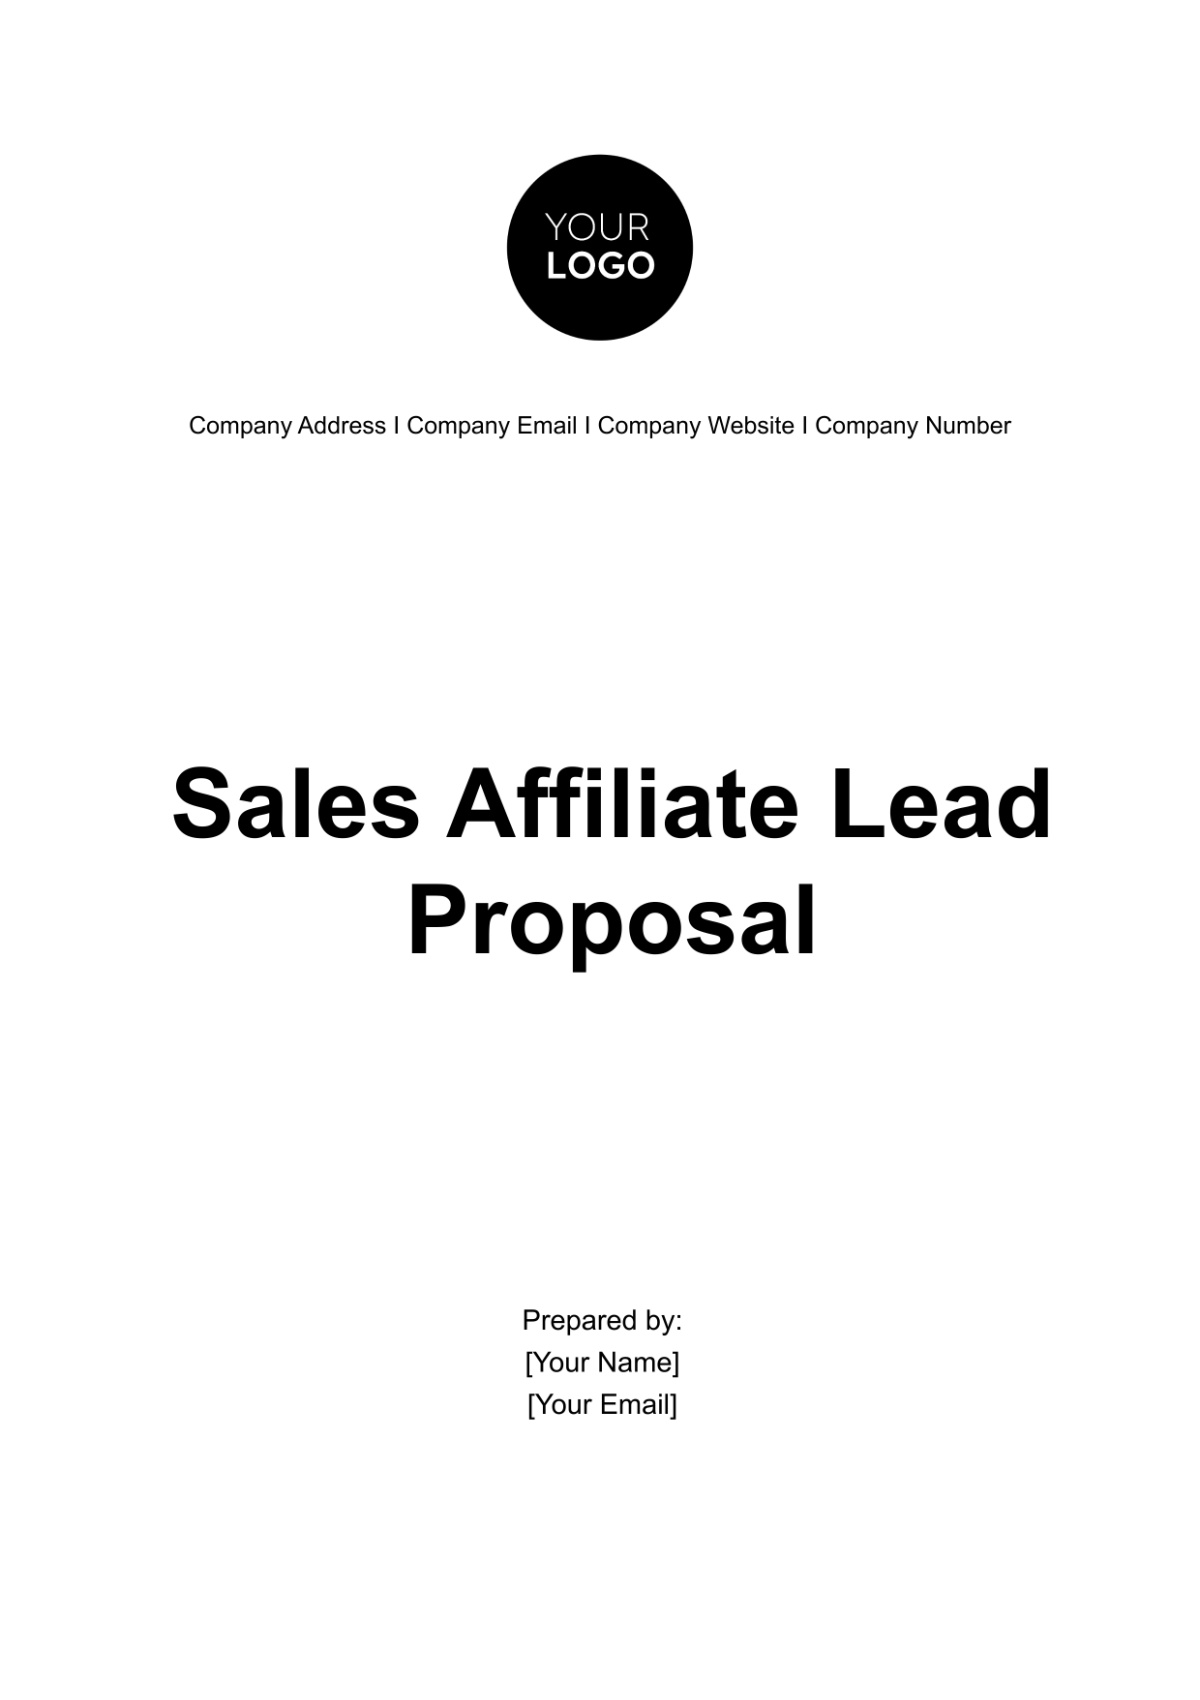 Sales Affiliate Lead Proposal Template